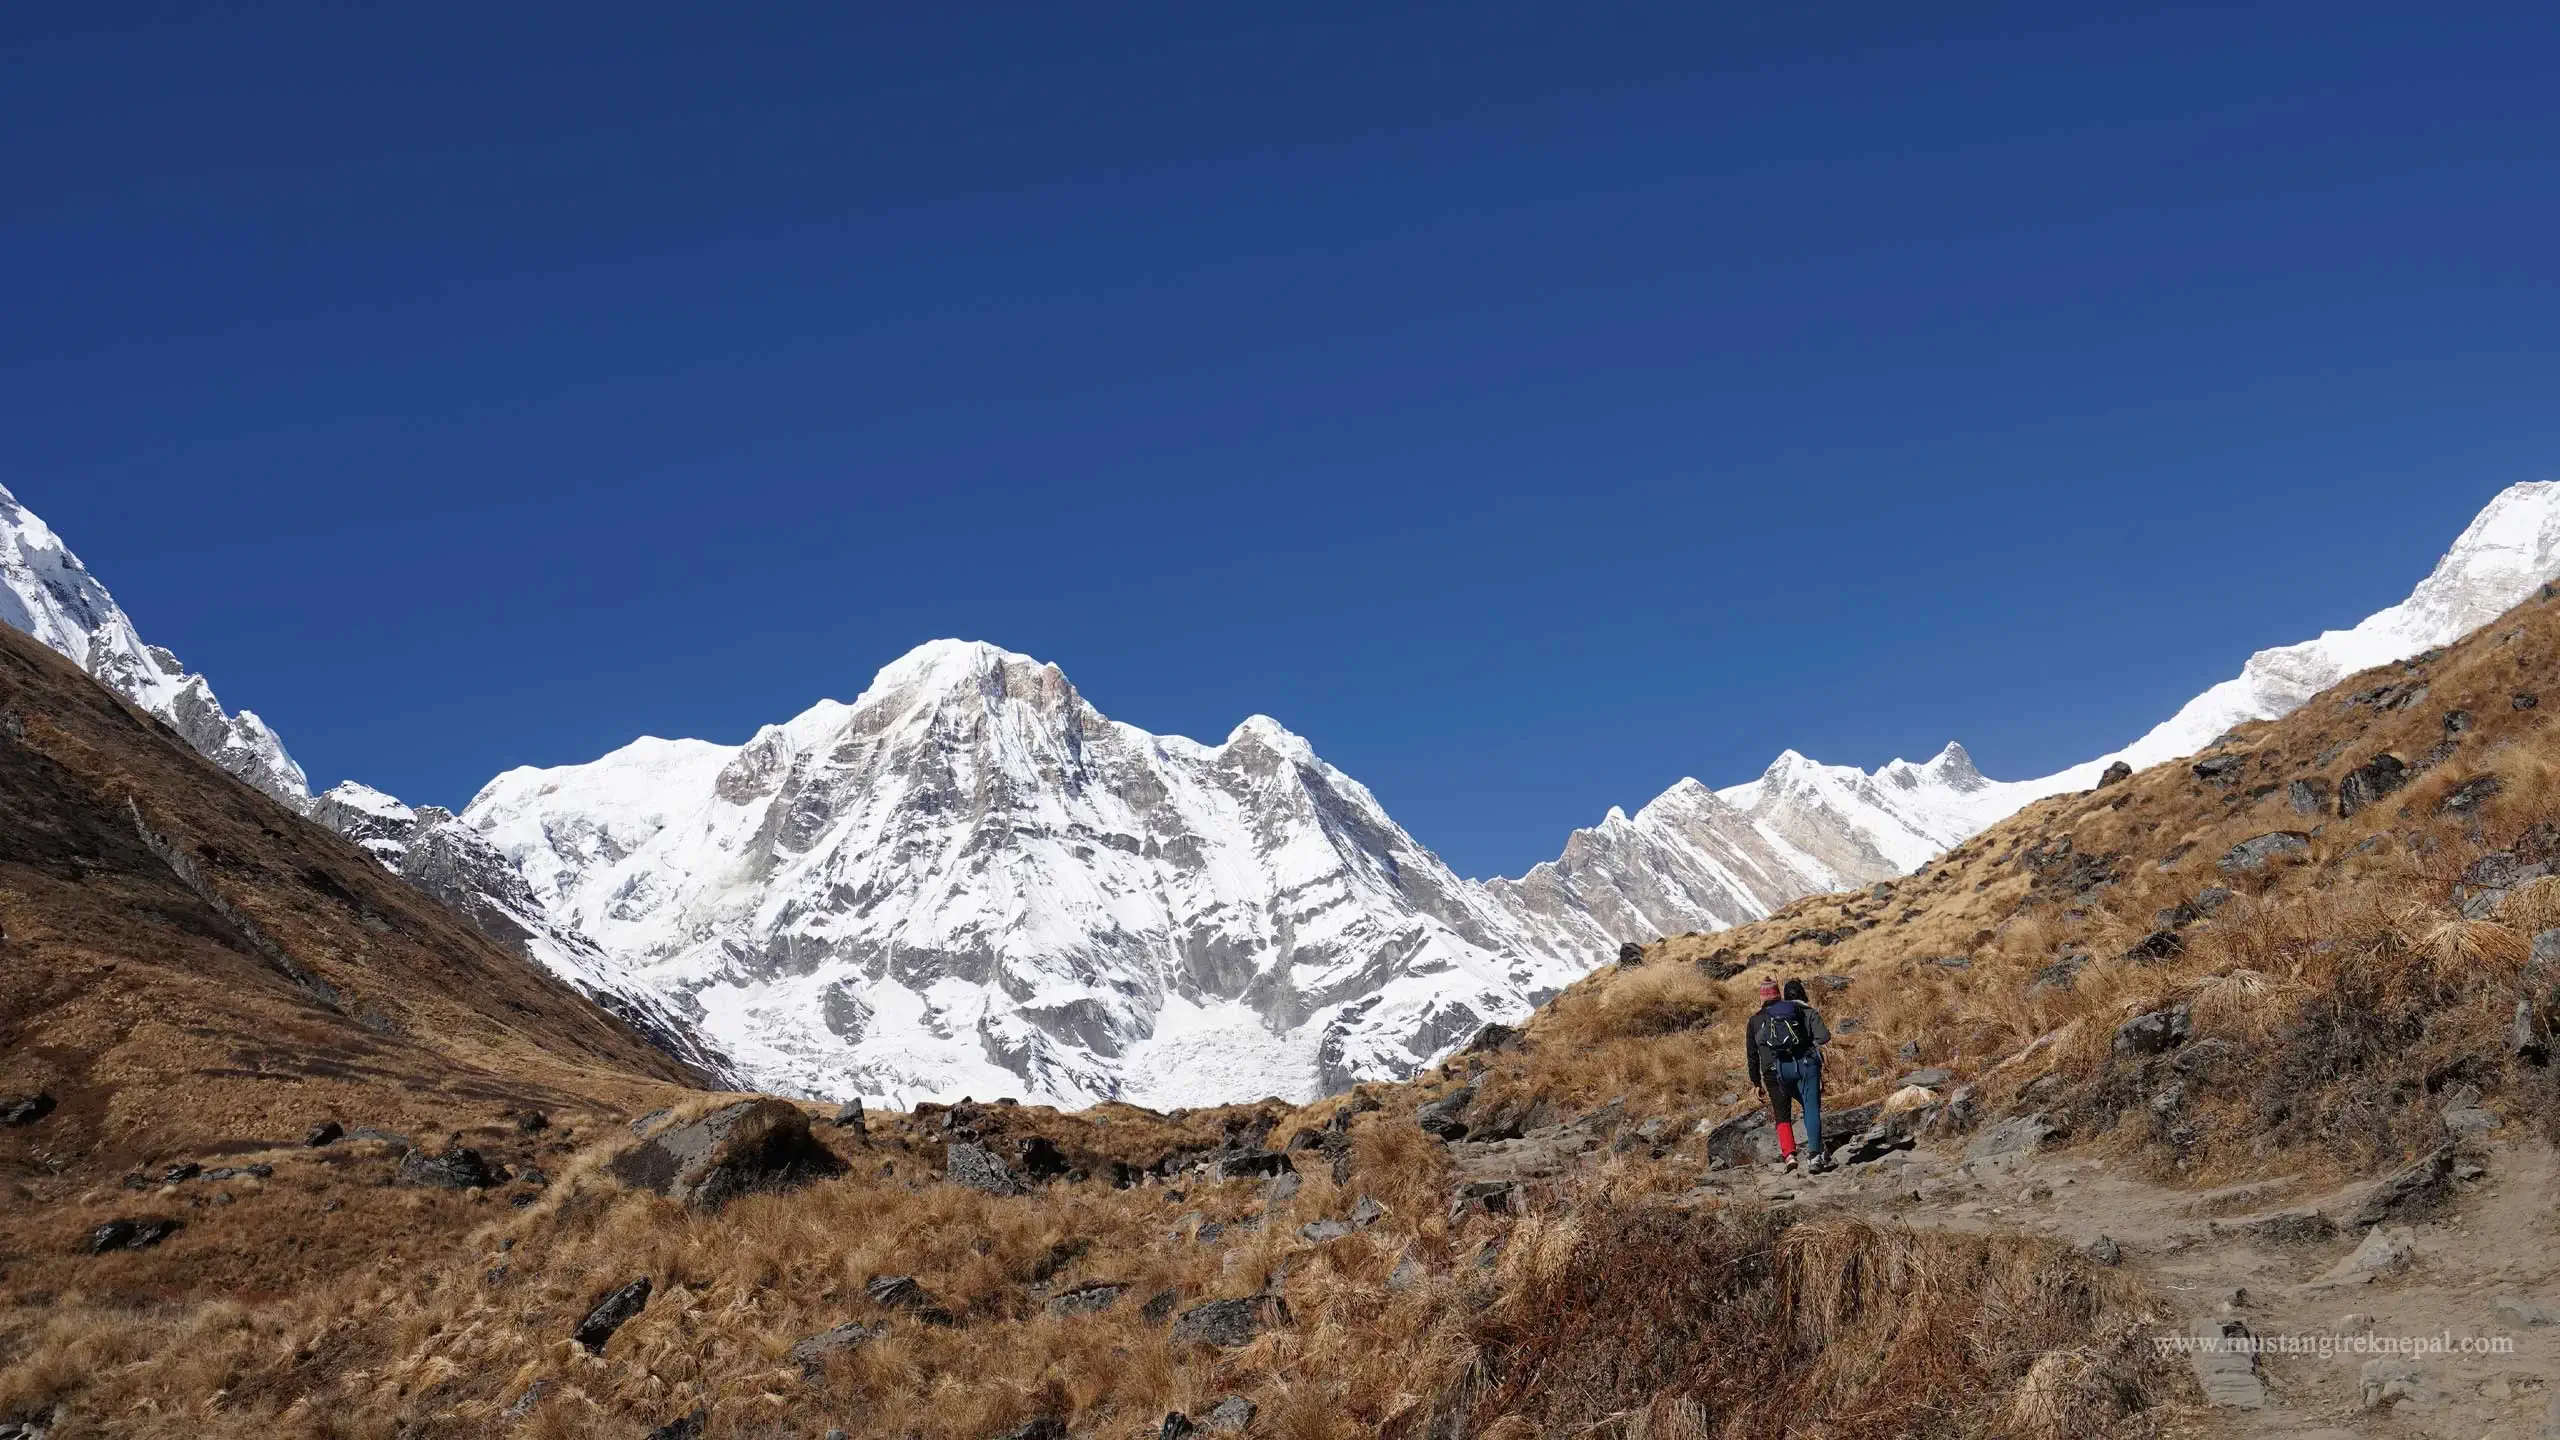 Annapurna base camp trek Nepal cost, route map & itinerary